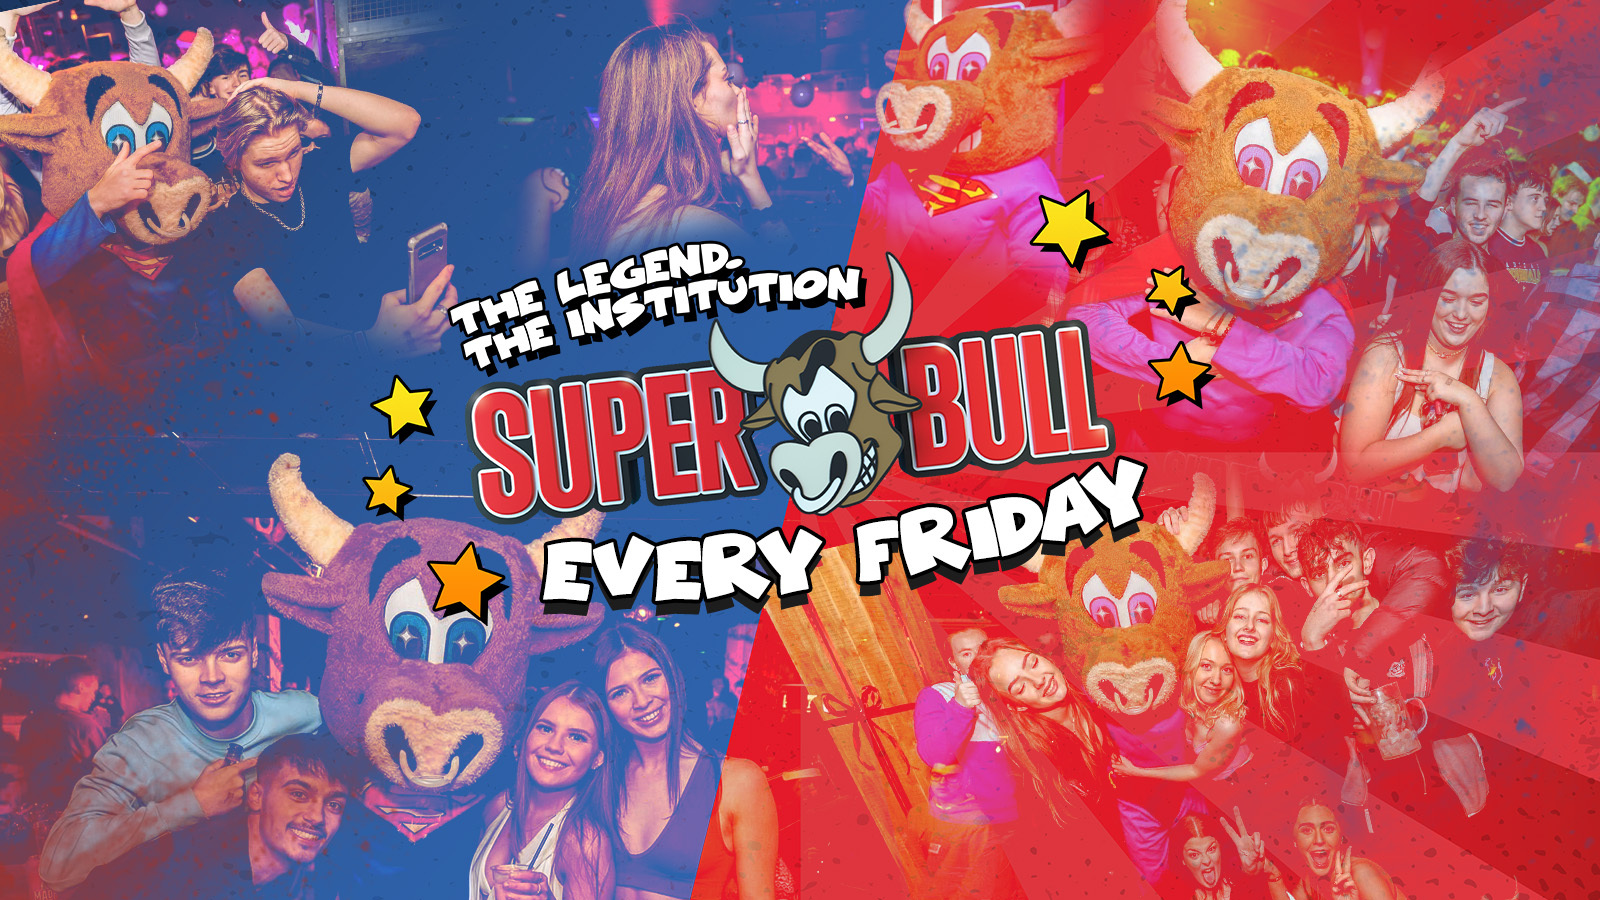 The Superbull (90% SOLD) – The Legend. The Institution – Fri 10th Nov